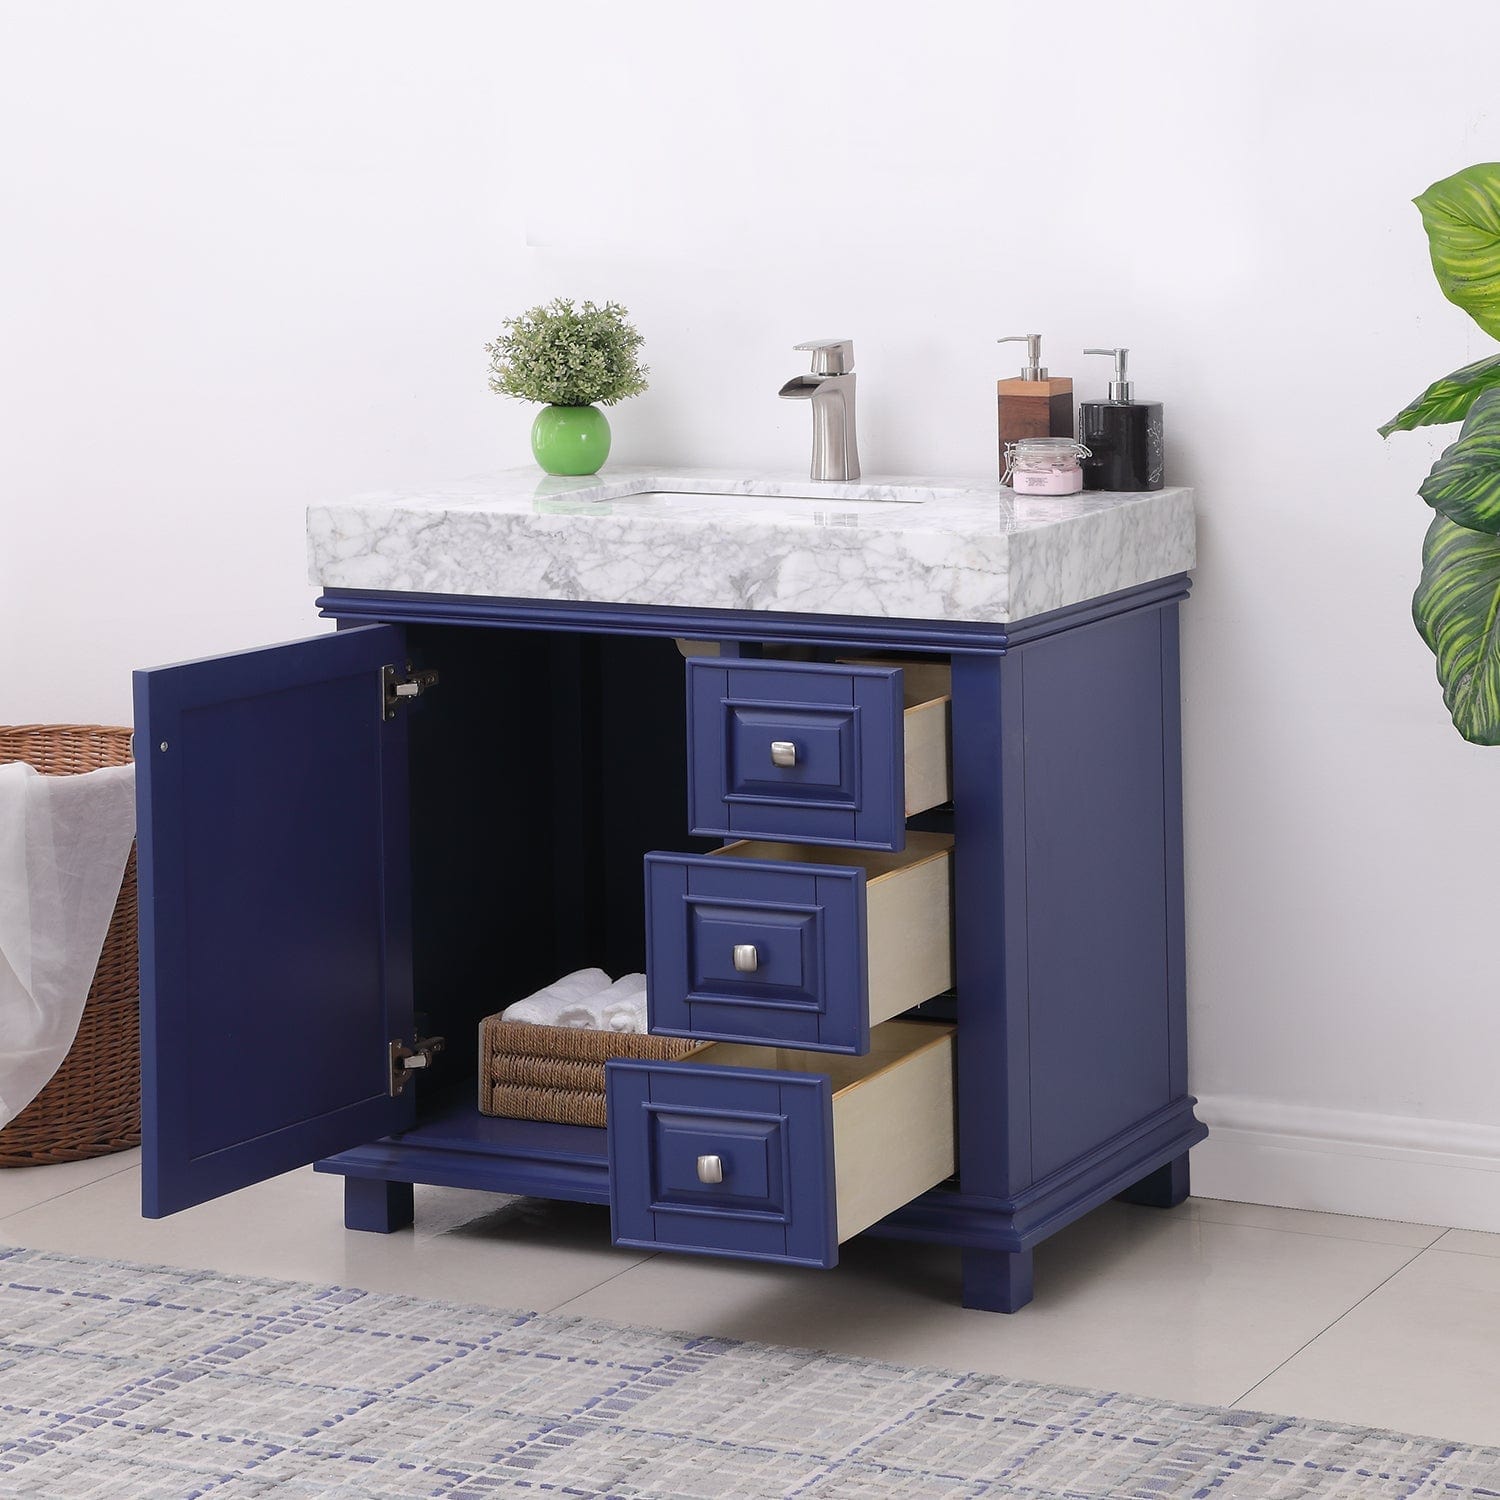 Altair Jardin 36" Single Bathroom Vanity Set in Jewelry Blue and Carrara White Marble Countertop without Mirror 539036-JB-CA-NM - Molaix631112970969Vanity539036-JB-CA-NM